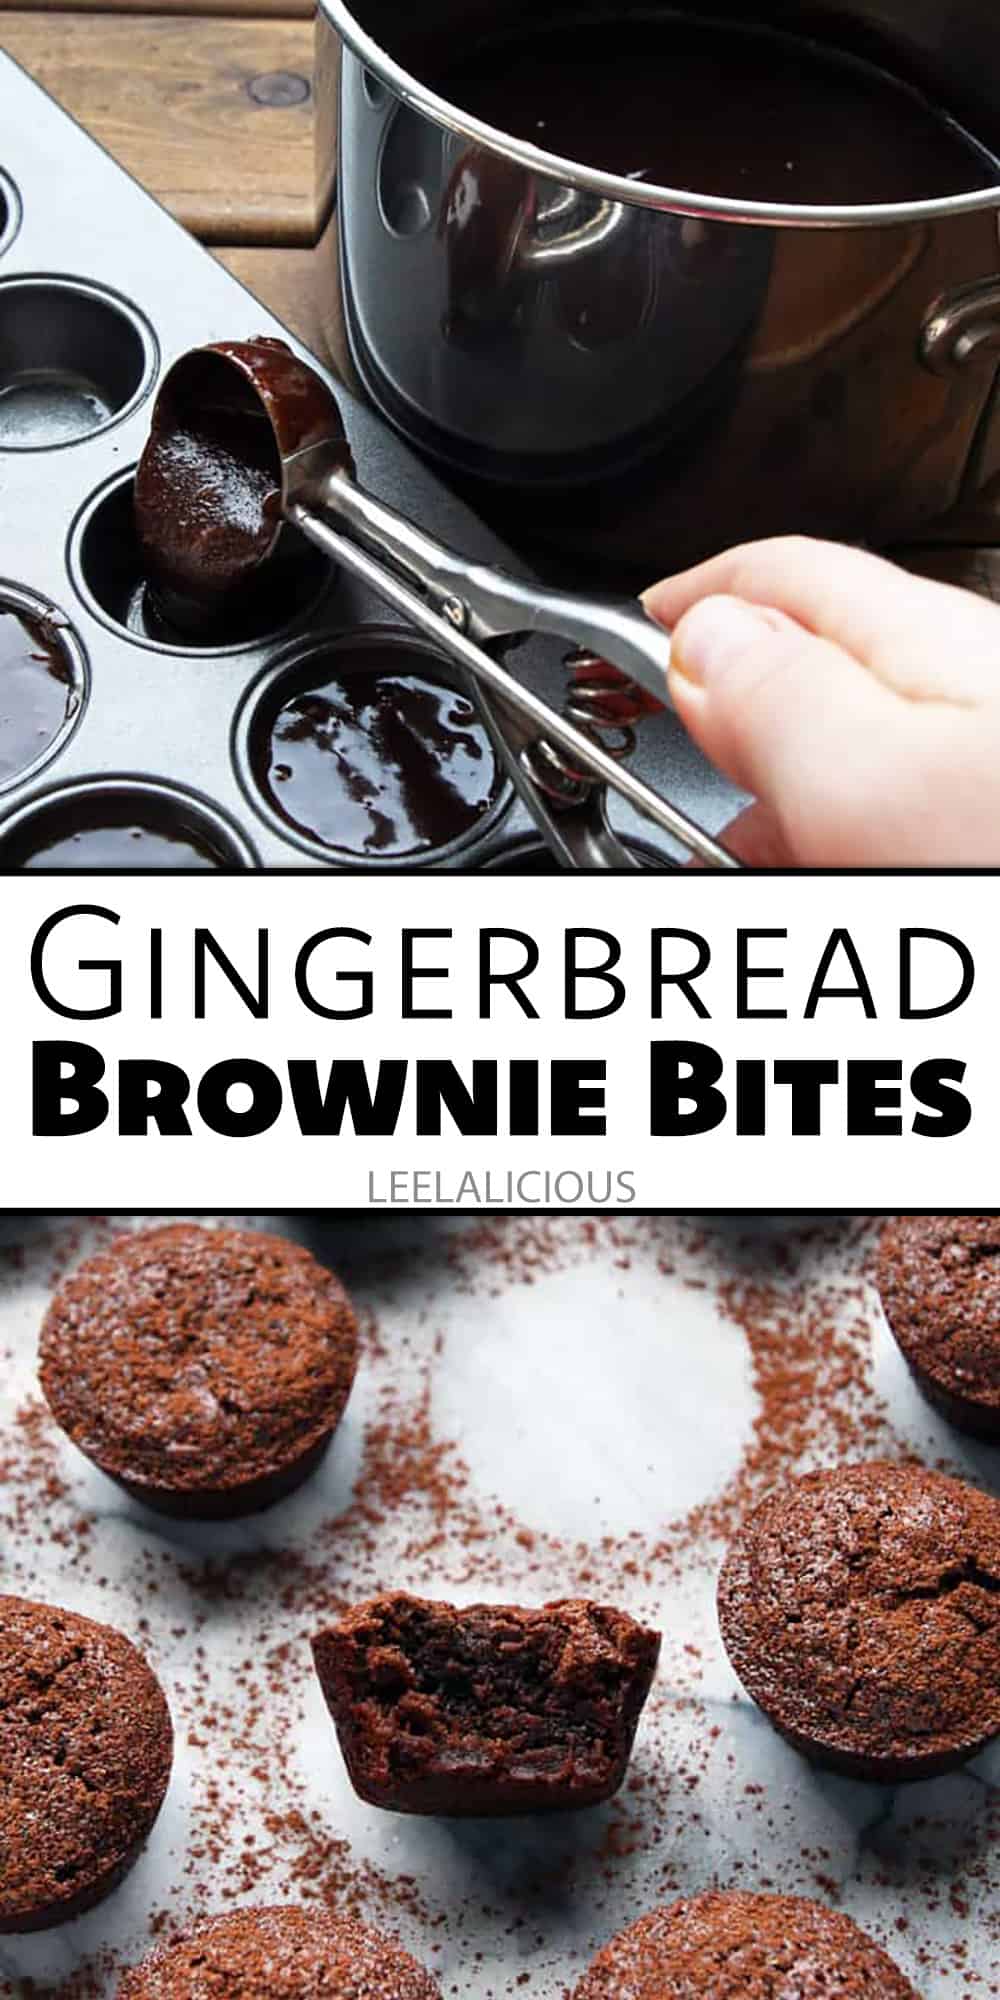 Gingerbread Brownie Bites Recipes